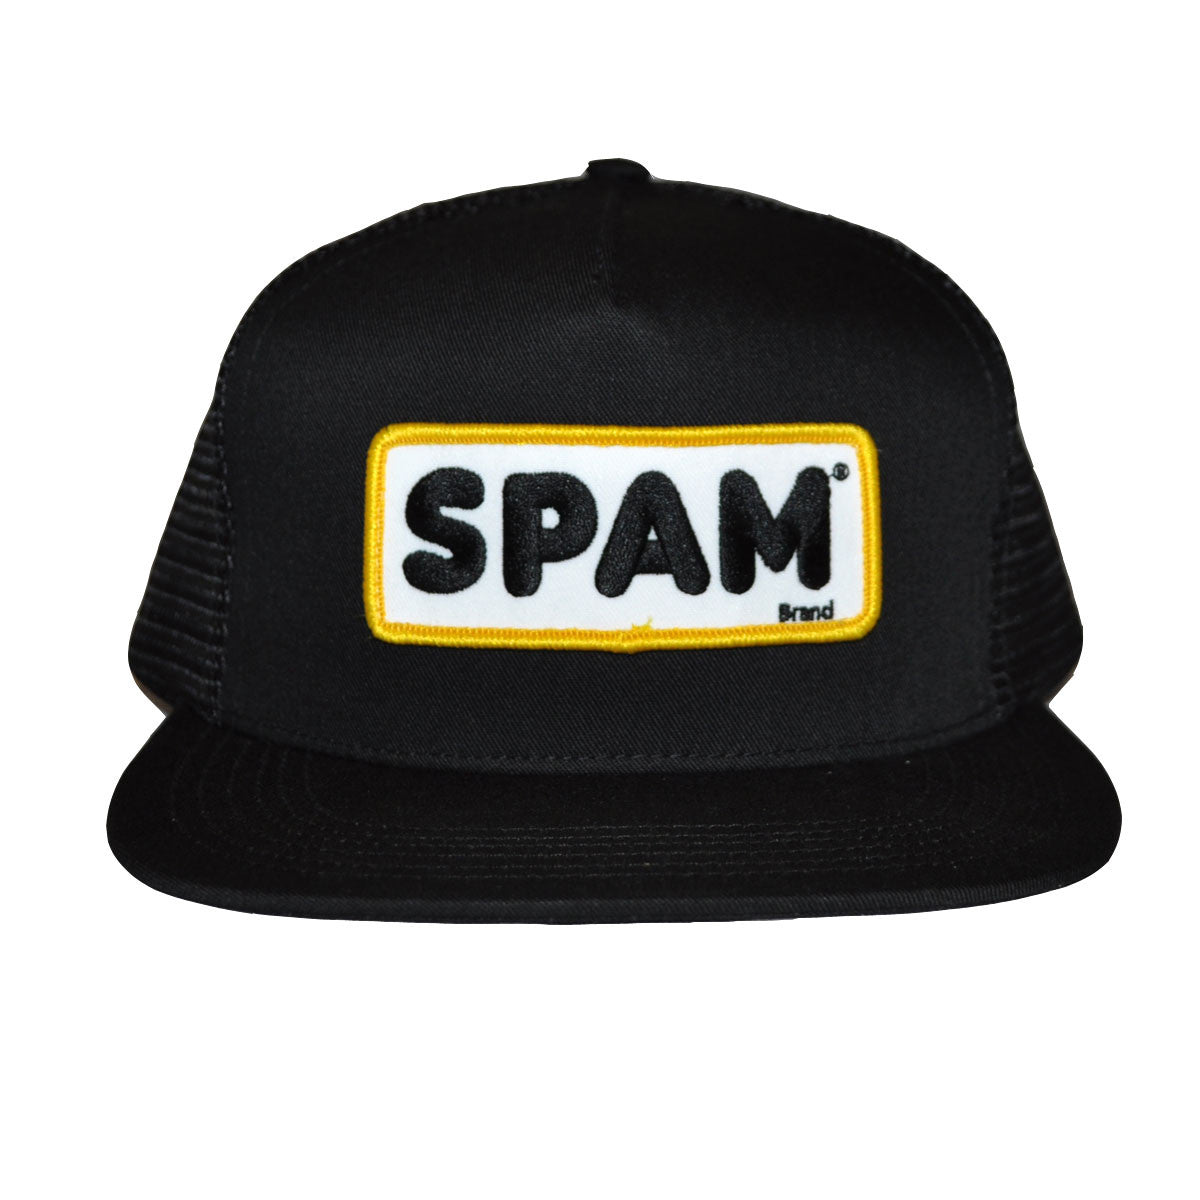 HUF - Spam Trucker Hat, Black - The Giant Peach